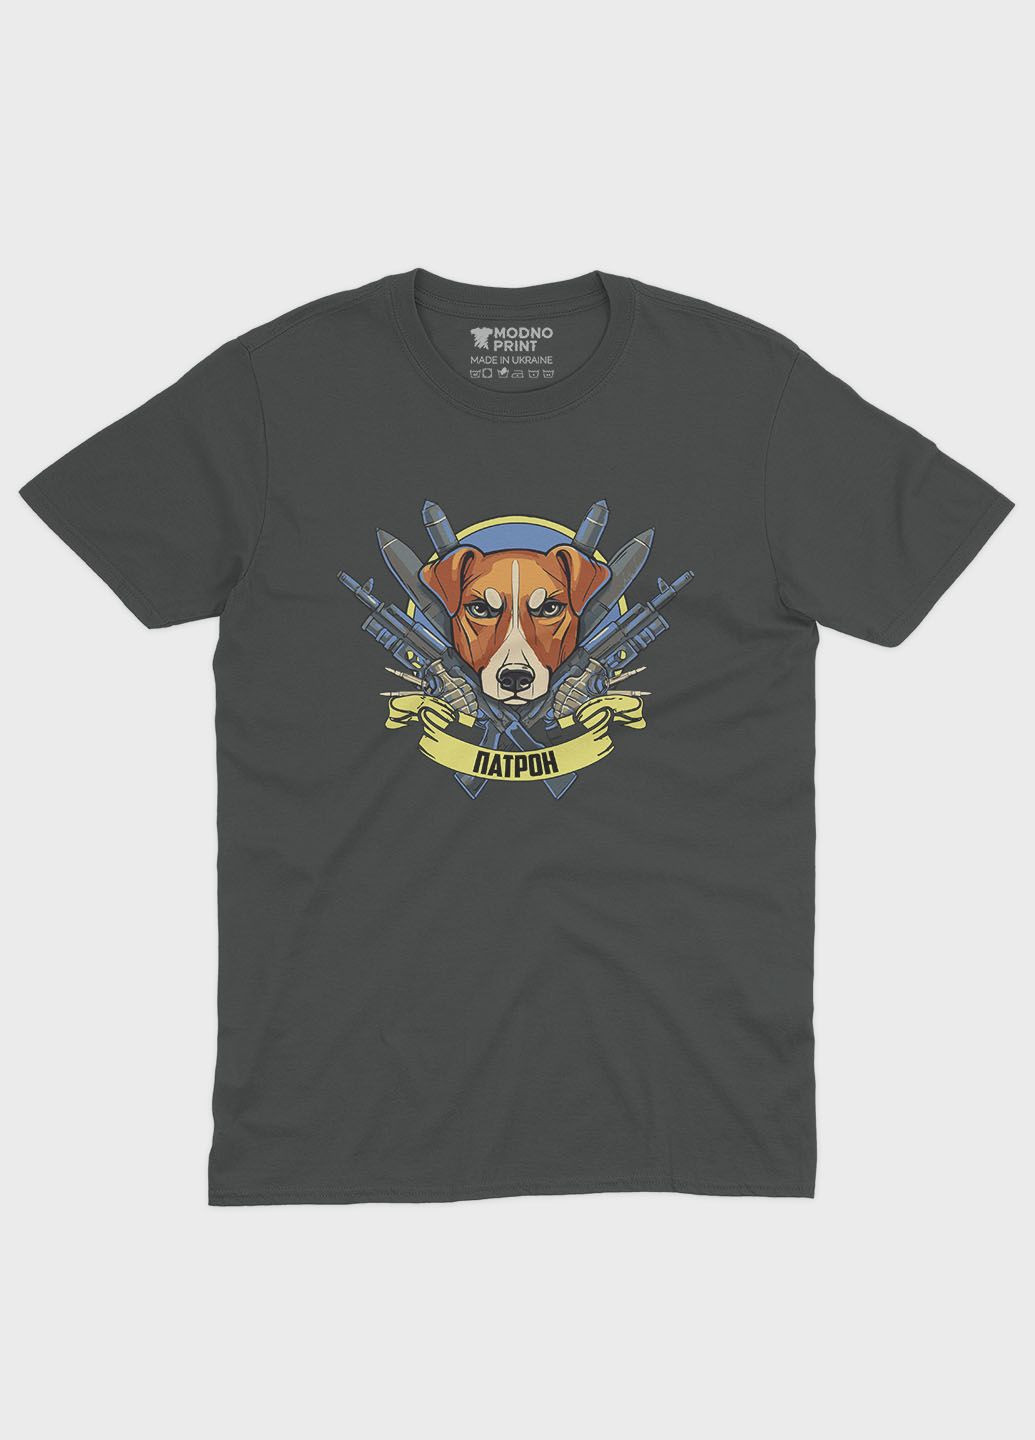 Темно-серая мужская футболка с патриотическим принтом пес патрон (ts001-2-slg-005-1-056) Modno